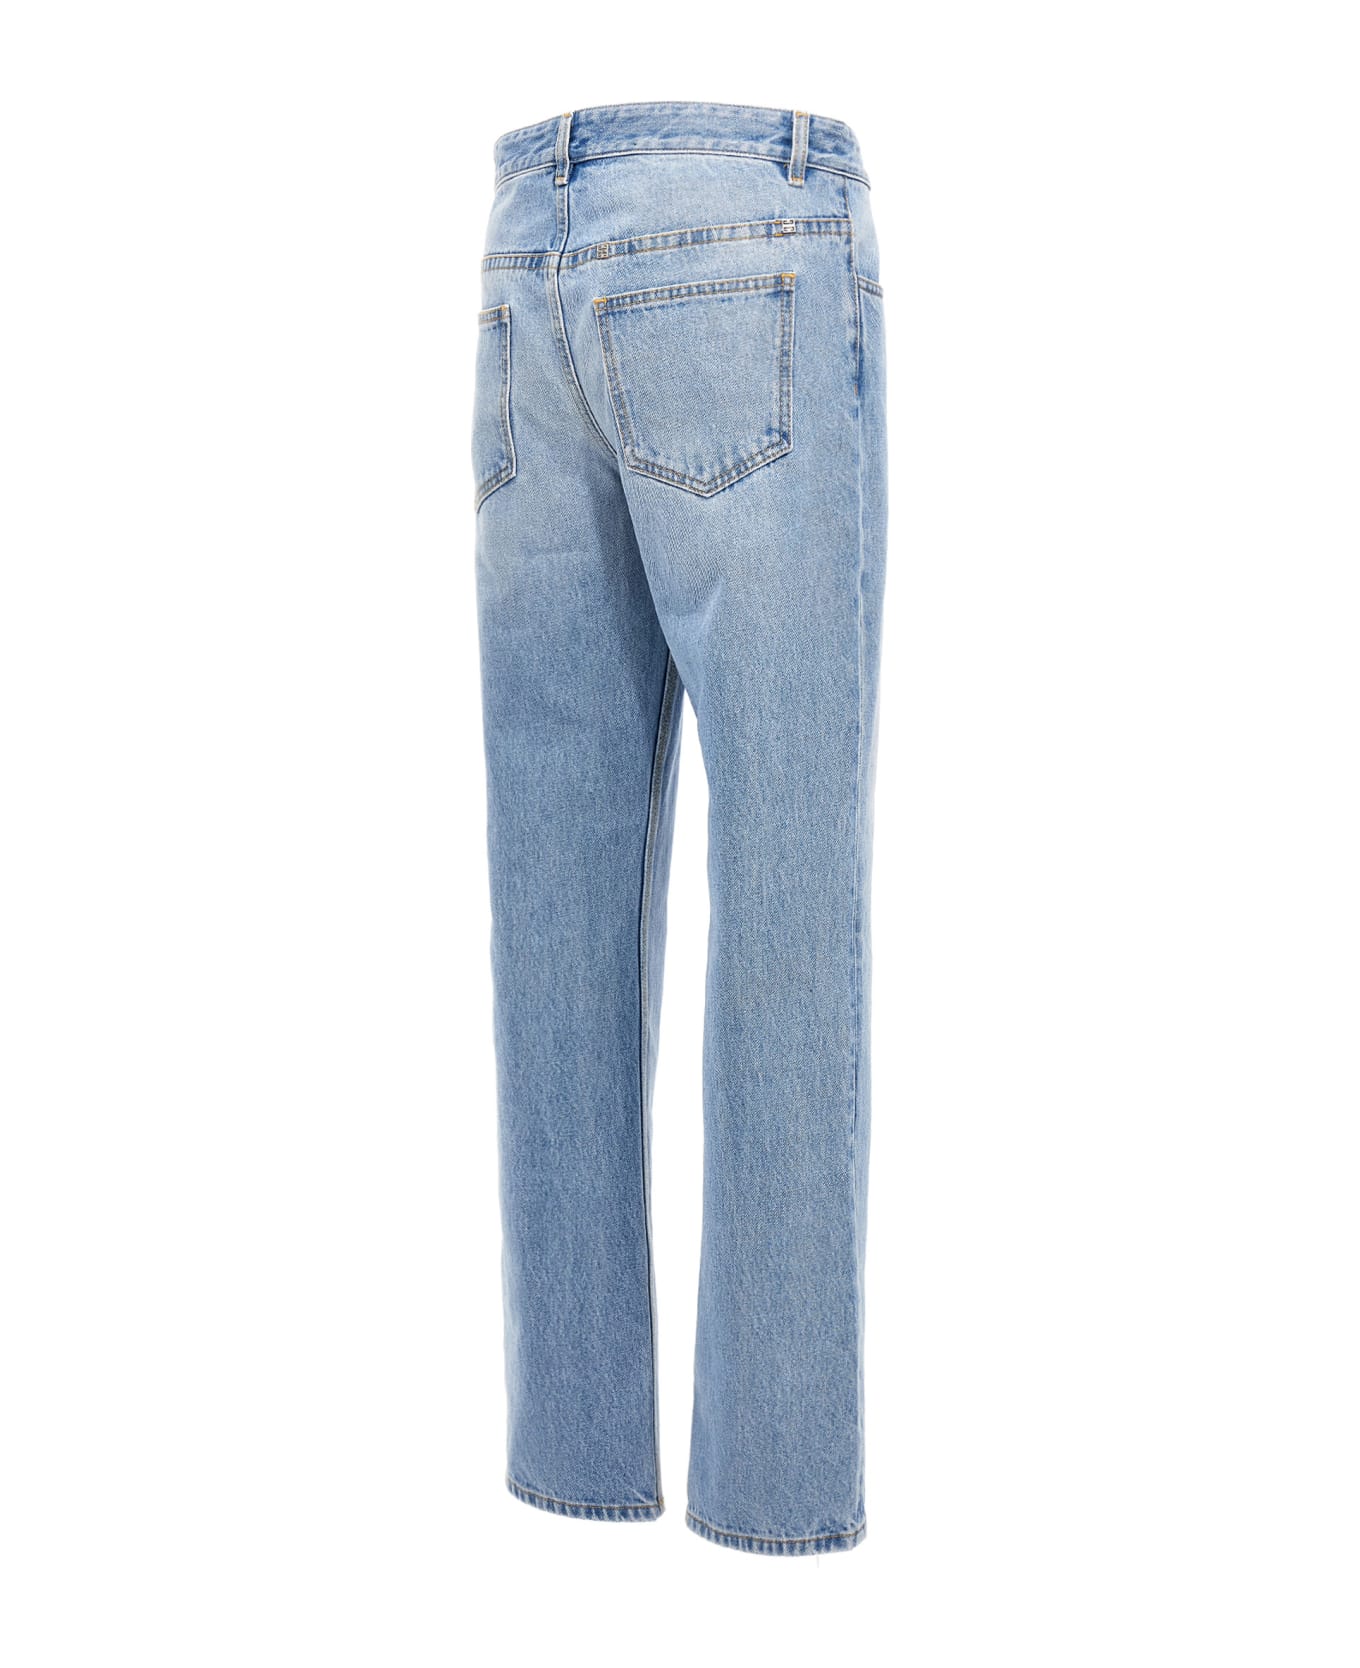 Givenchy Denim Jeans - LIGHT BLUE デニム